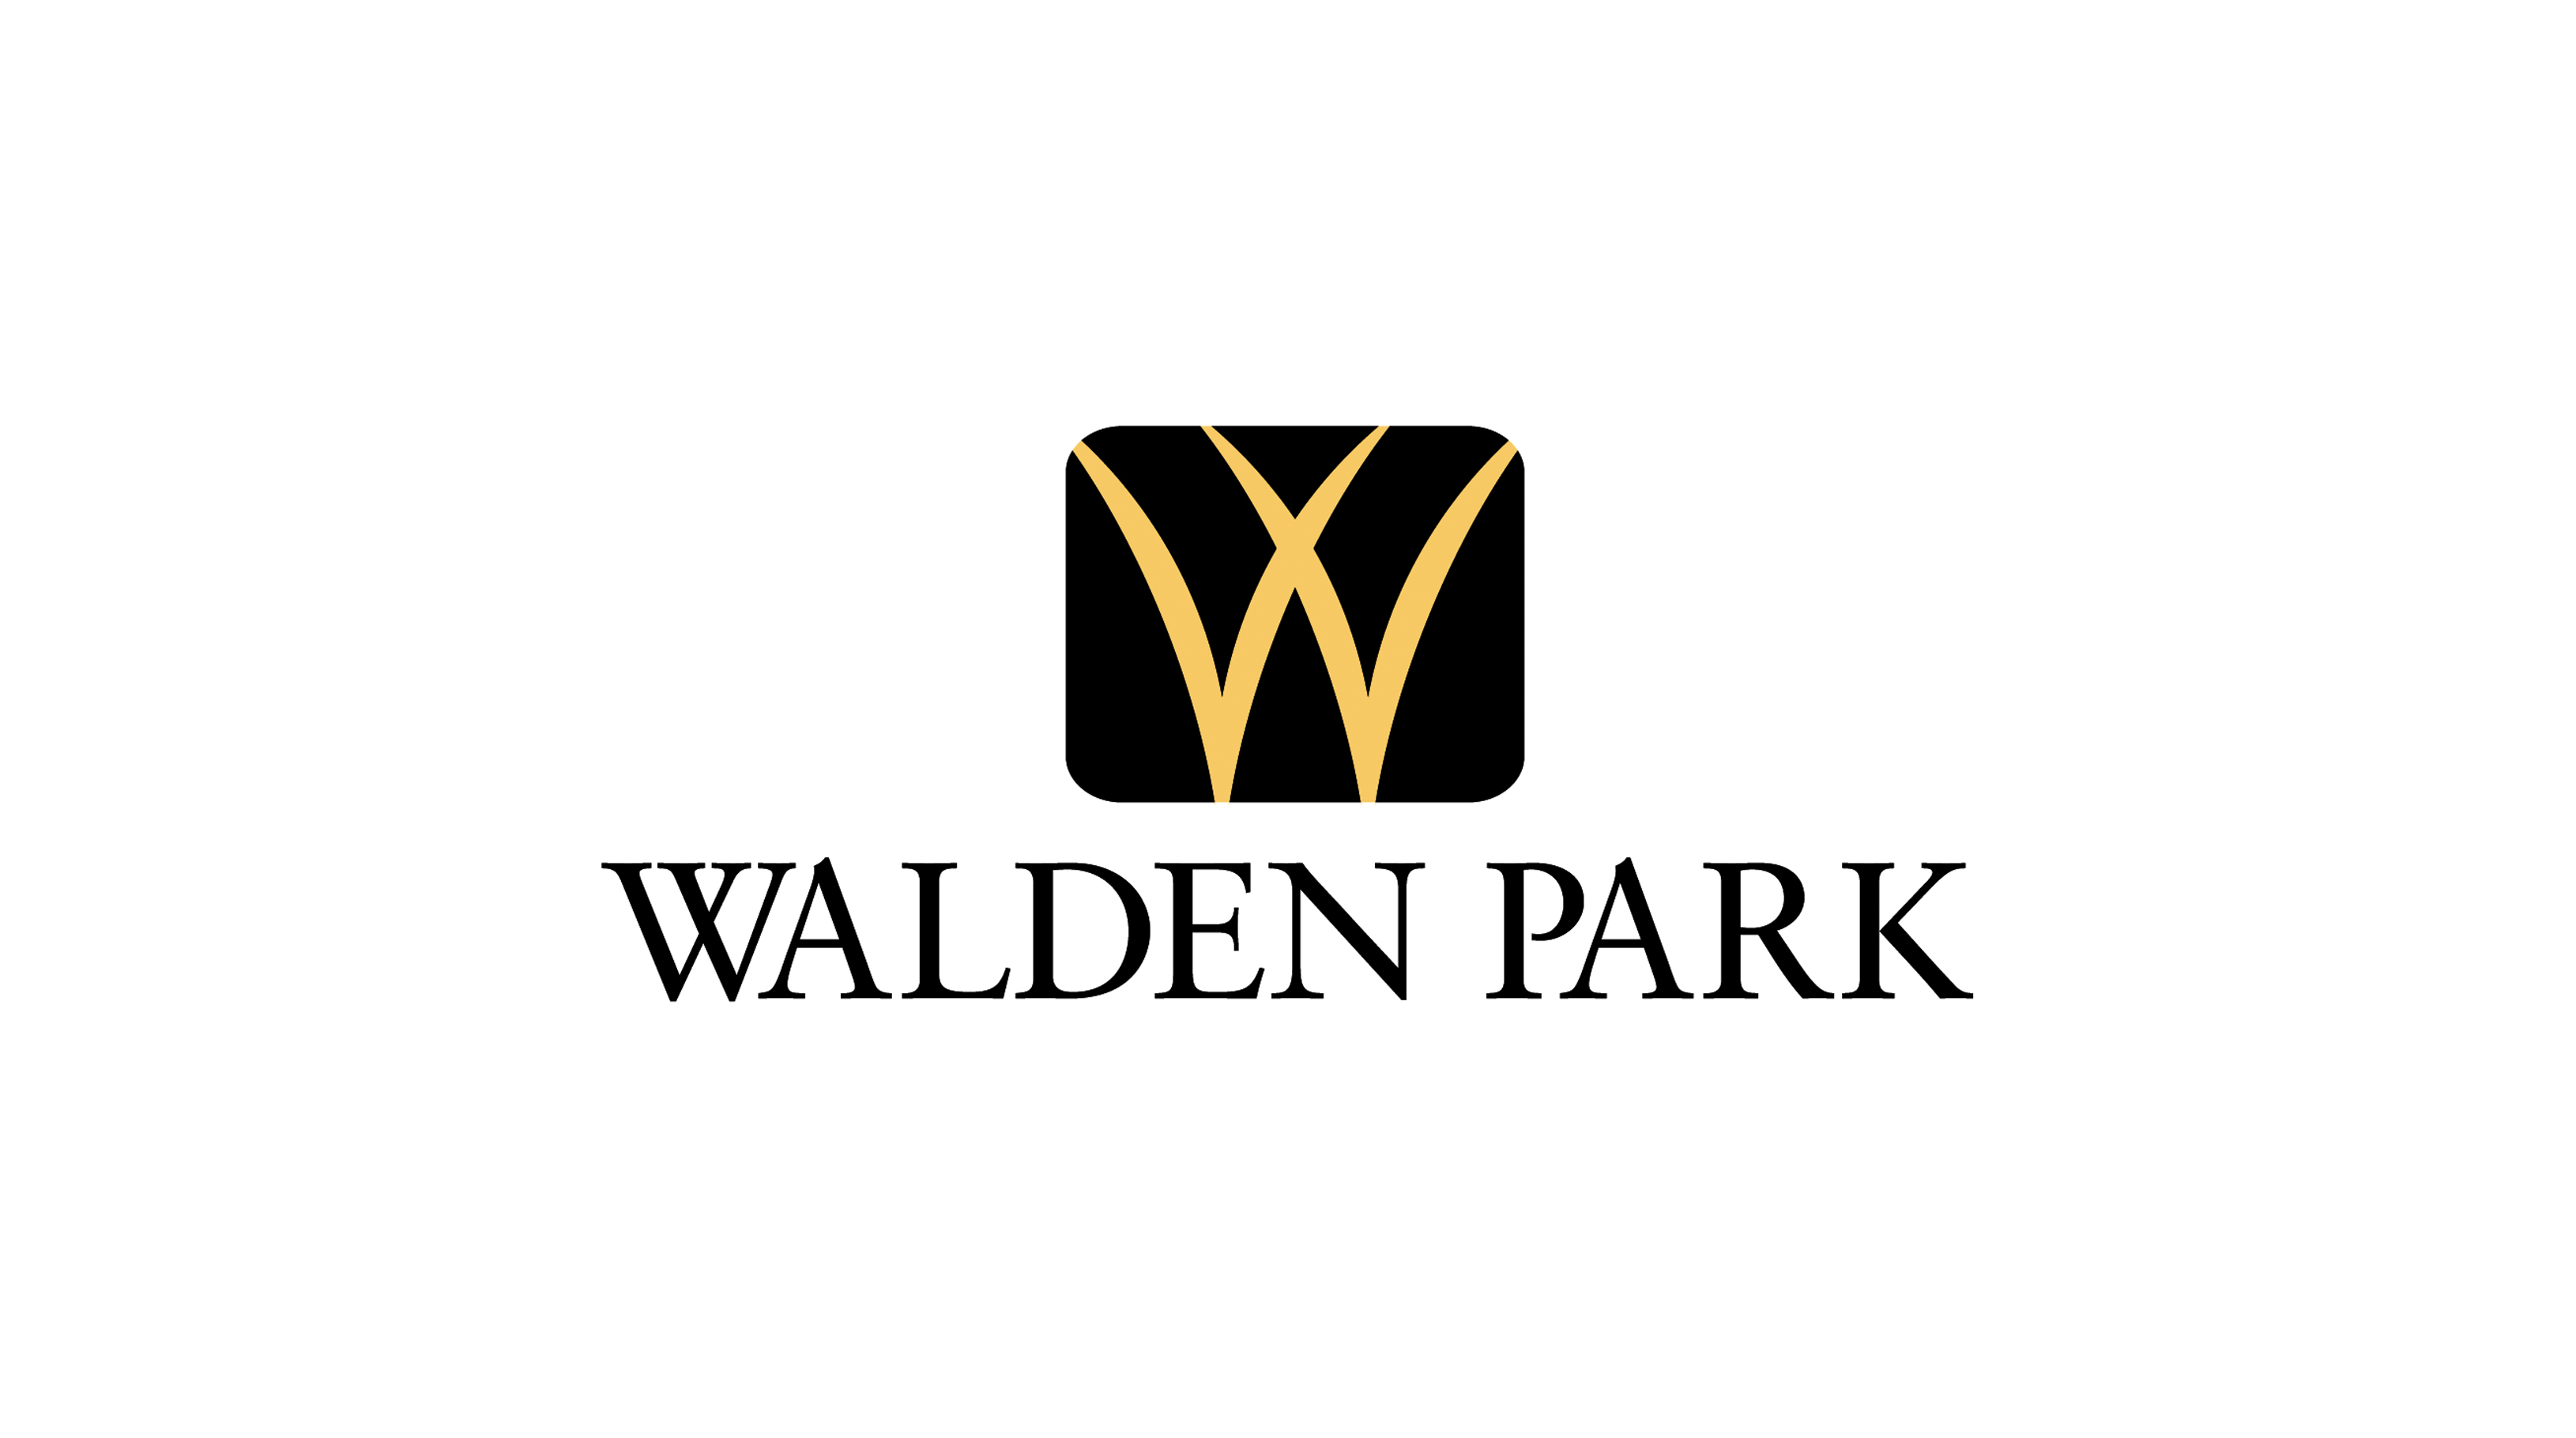 Walden Park logo